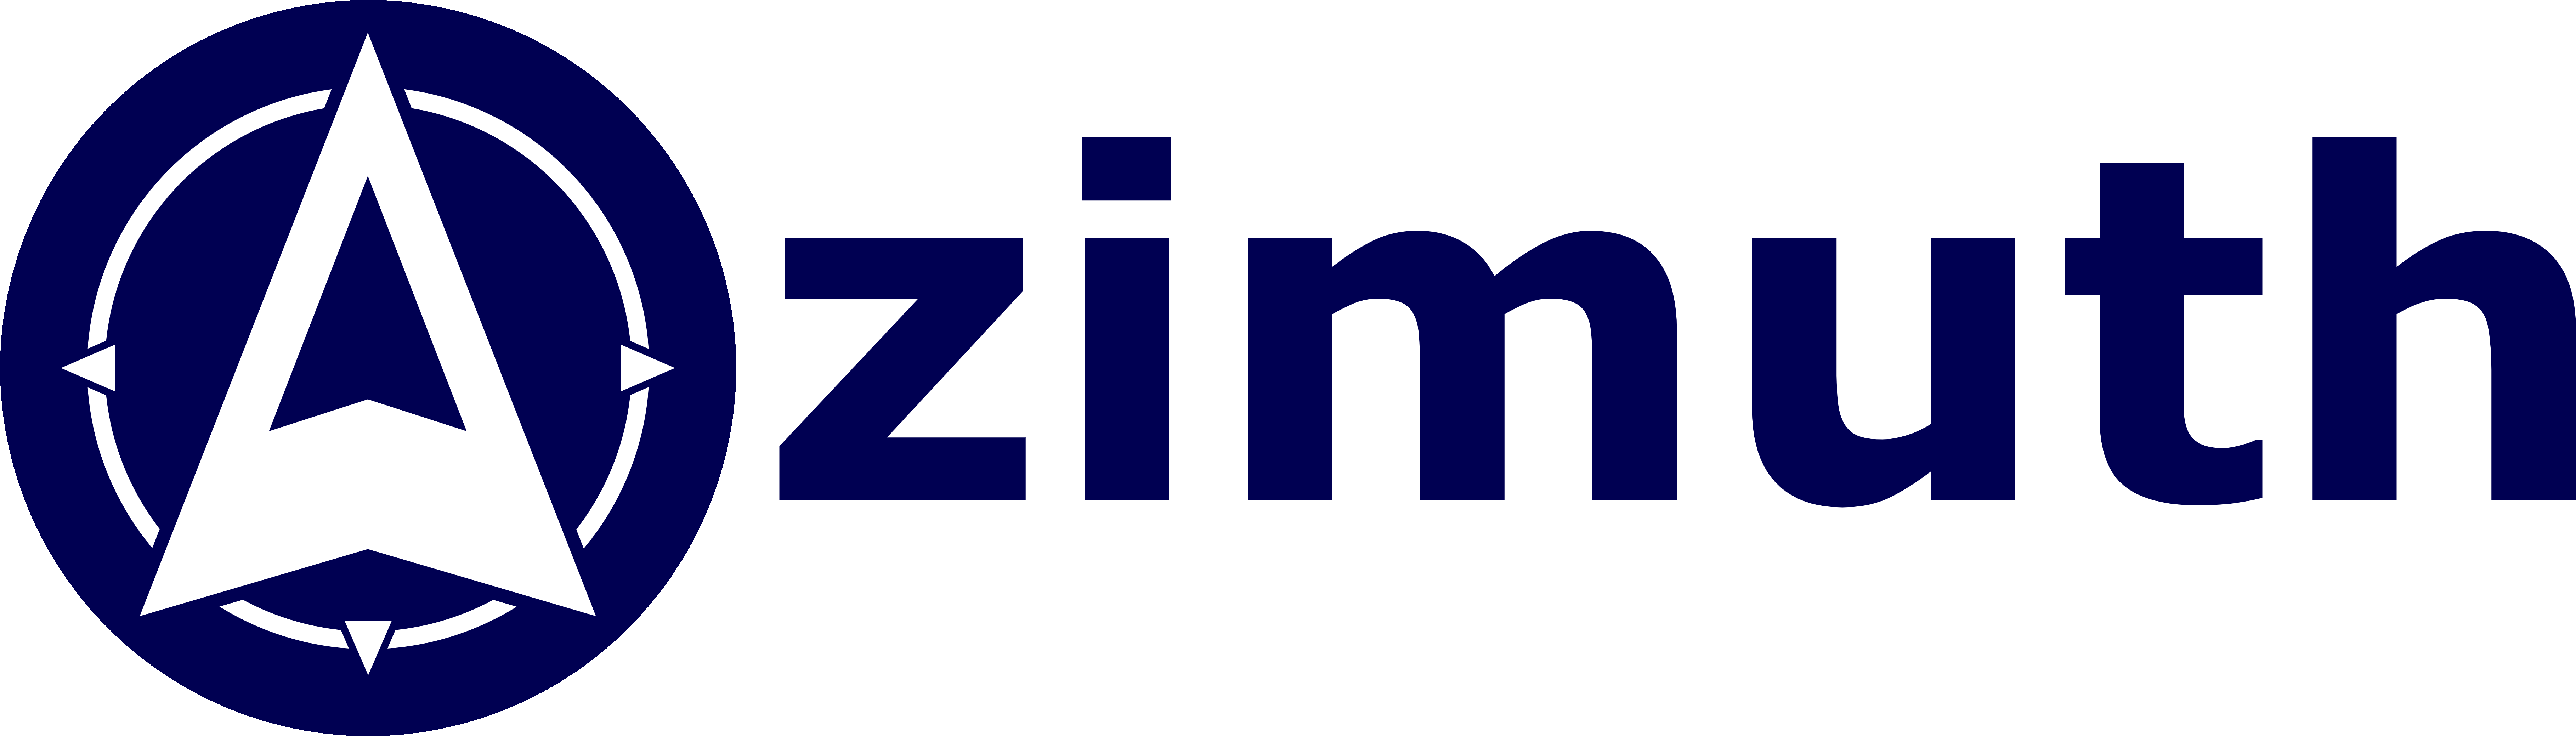 Azimuth logo in blue